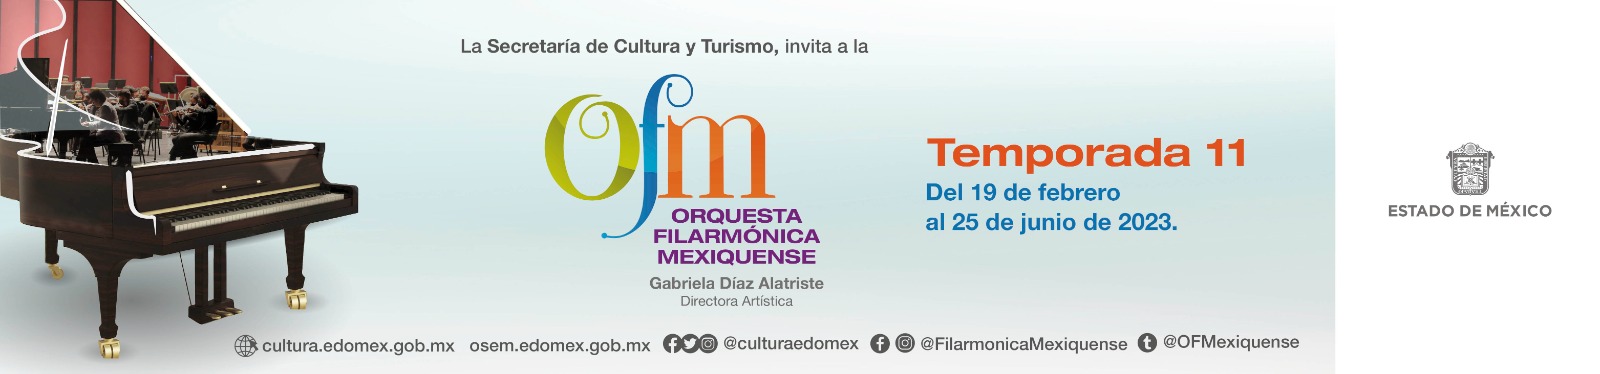 Orquesta Filarmonica Mexiquene. Temporada 11.